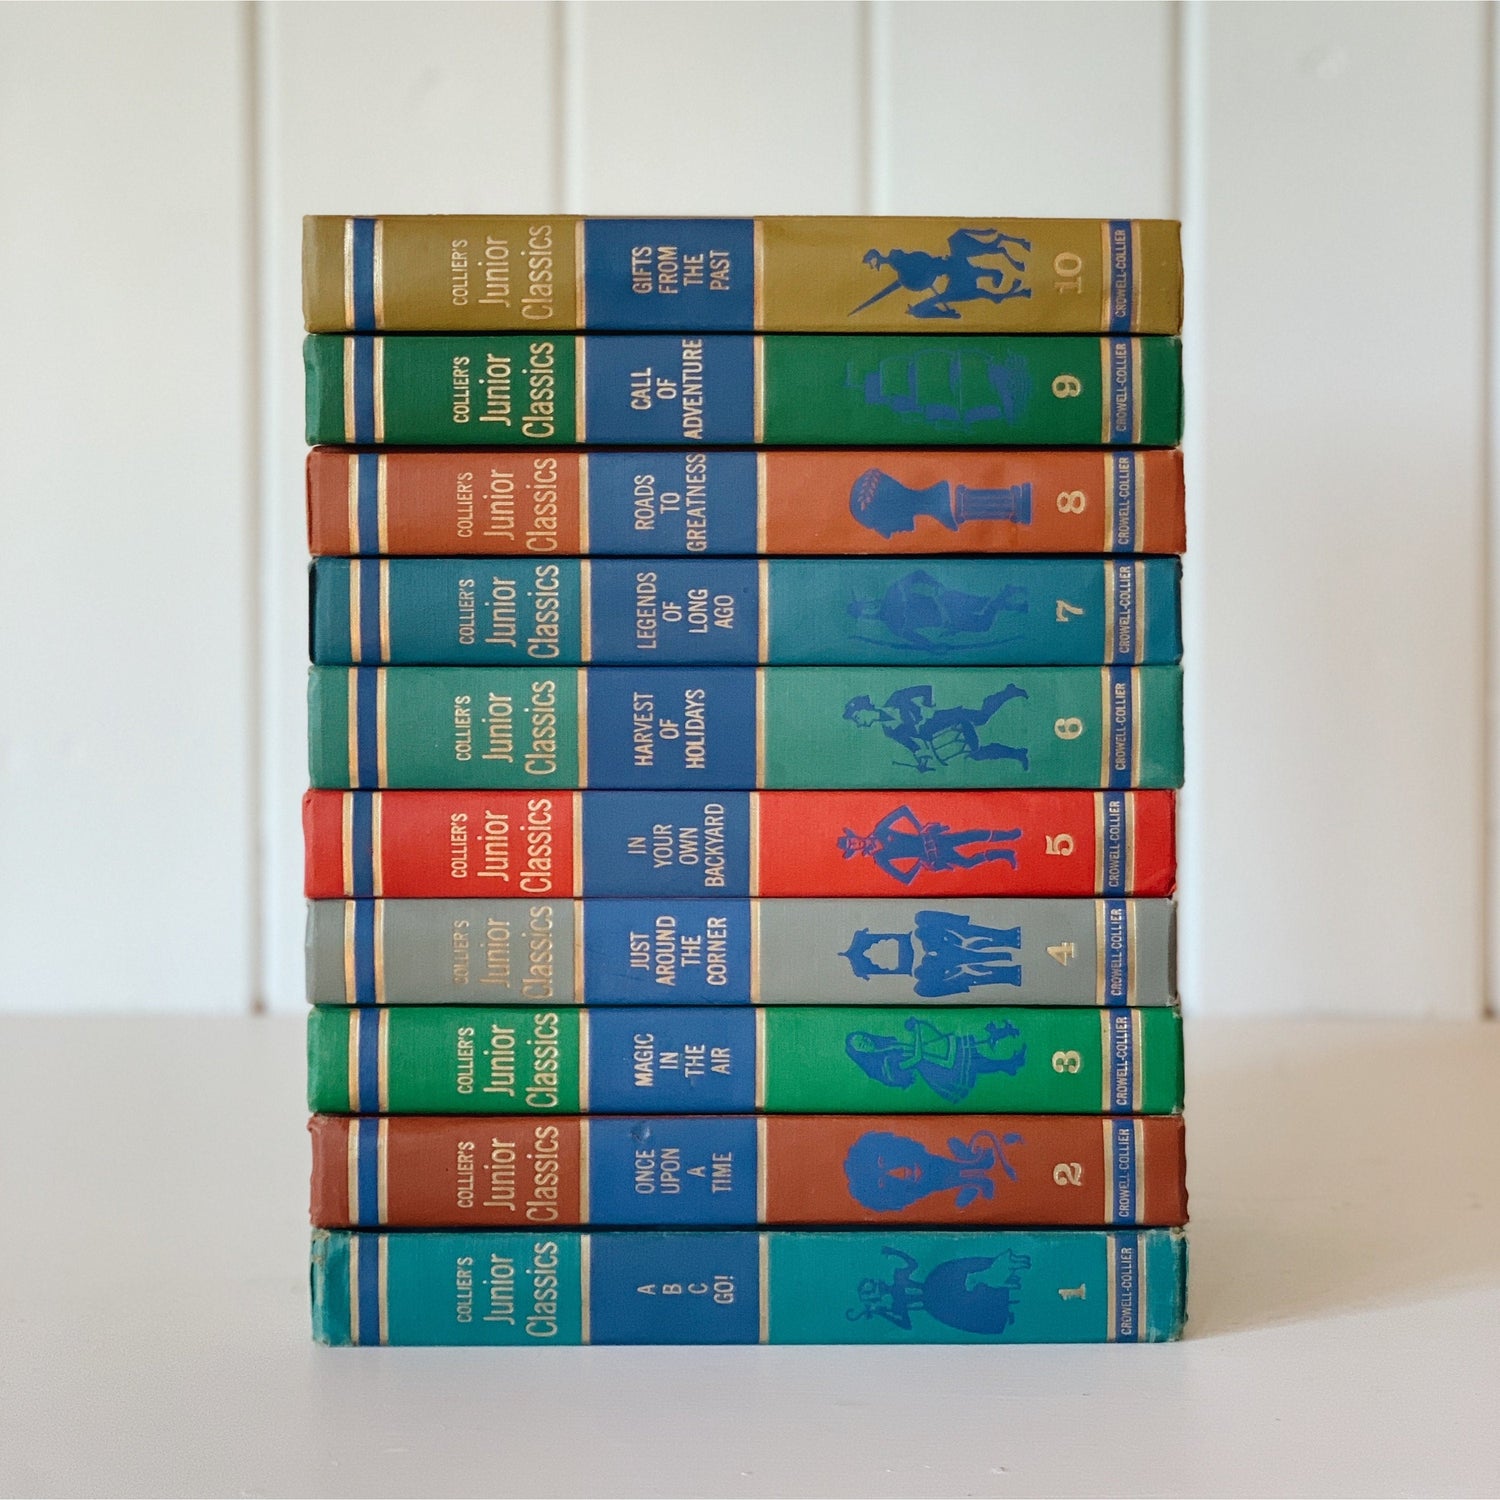 Collier's Junior Classics Set, Vintage 1962 Rainbow Book Set for Decor, Playroom Decor, Mid-Century Decor